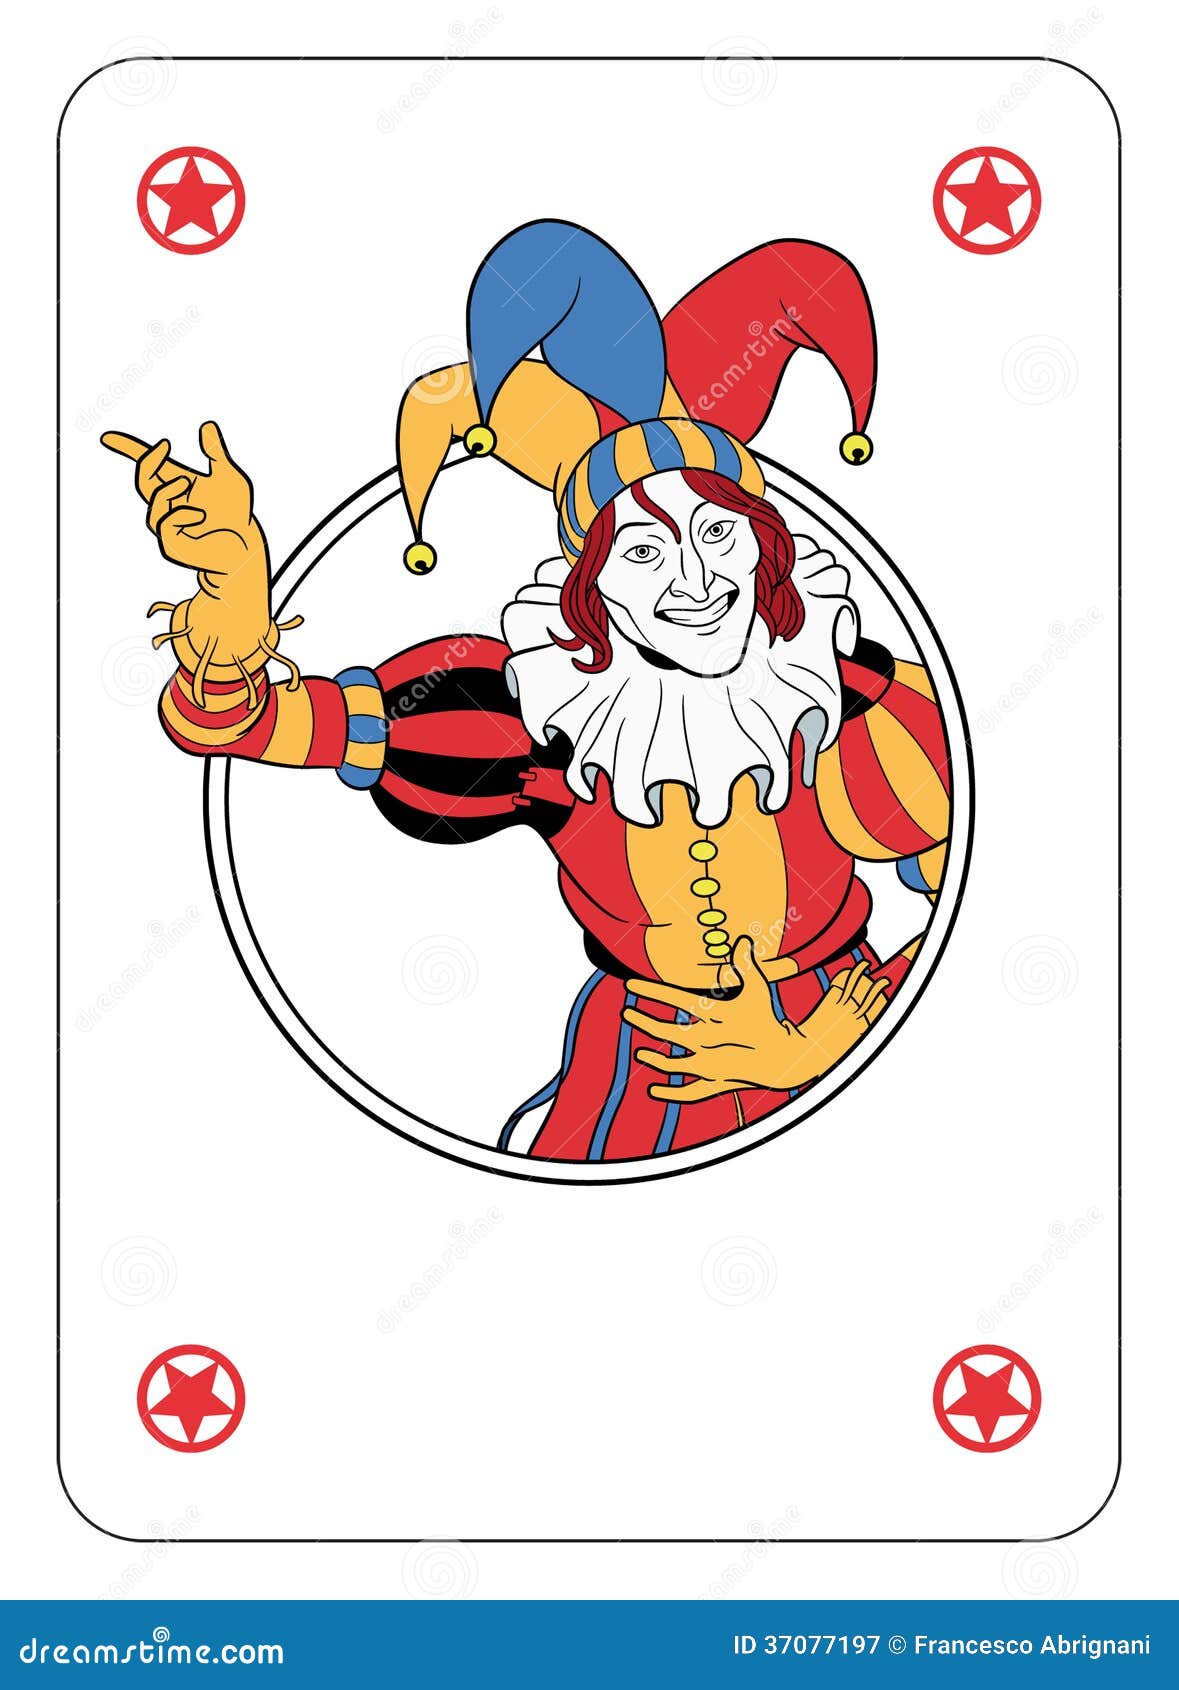 Joker playing card stock vector. Illustration of 